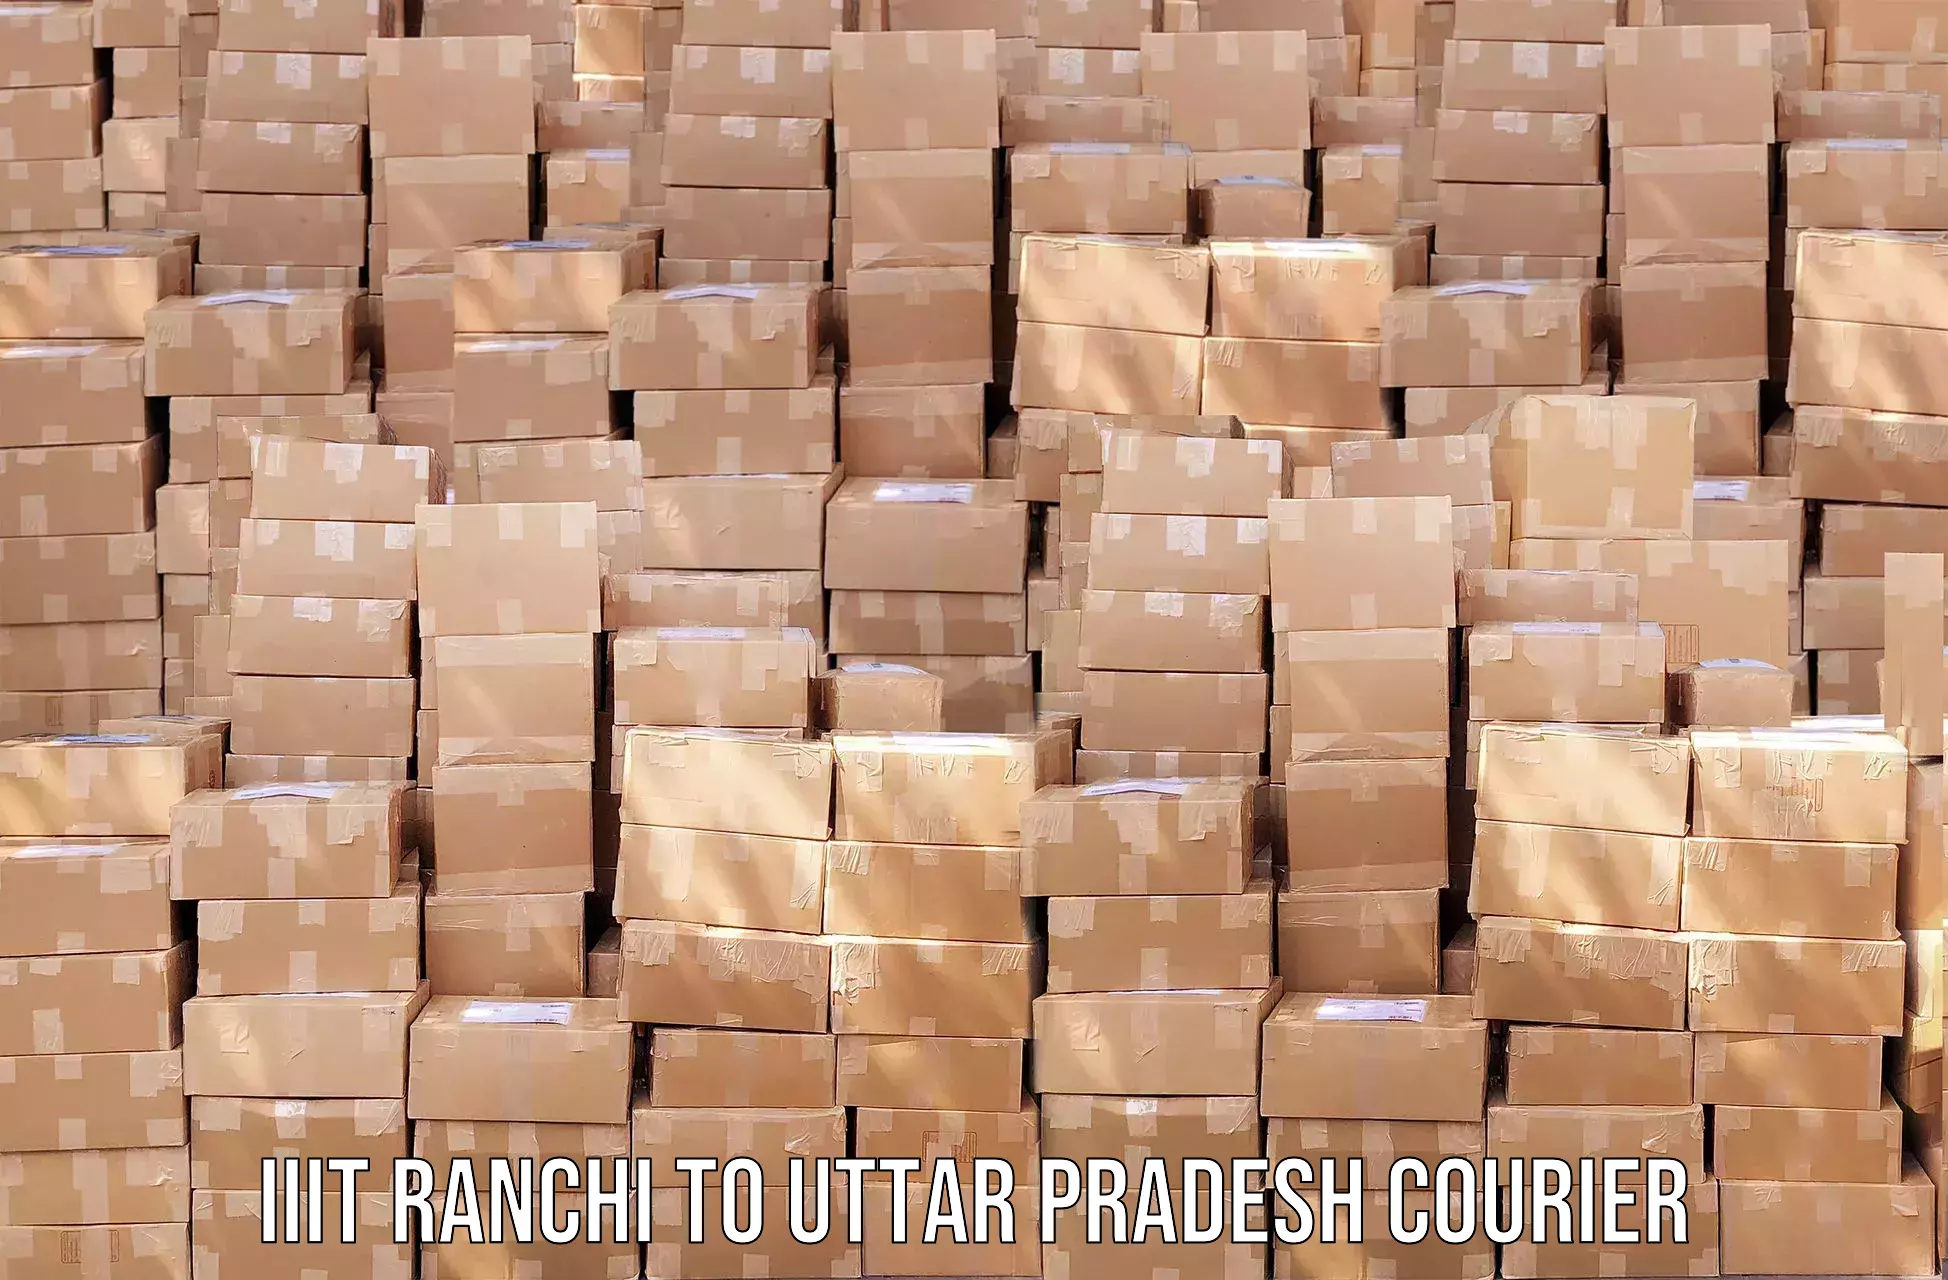 Efficient freight service in IIIT Ranchi to Barabanki